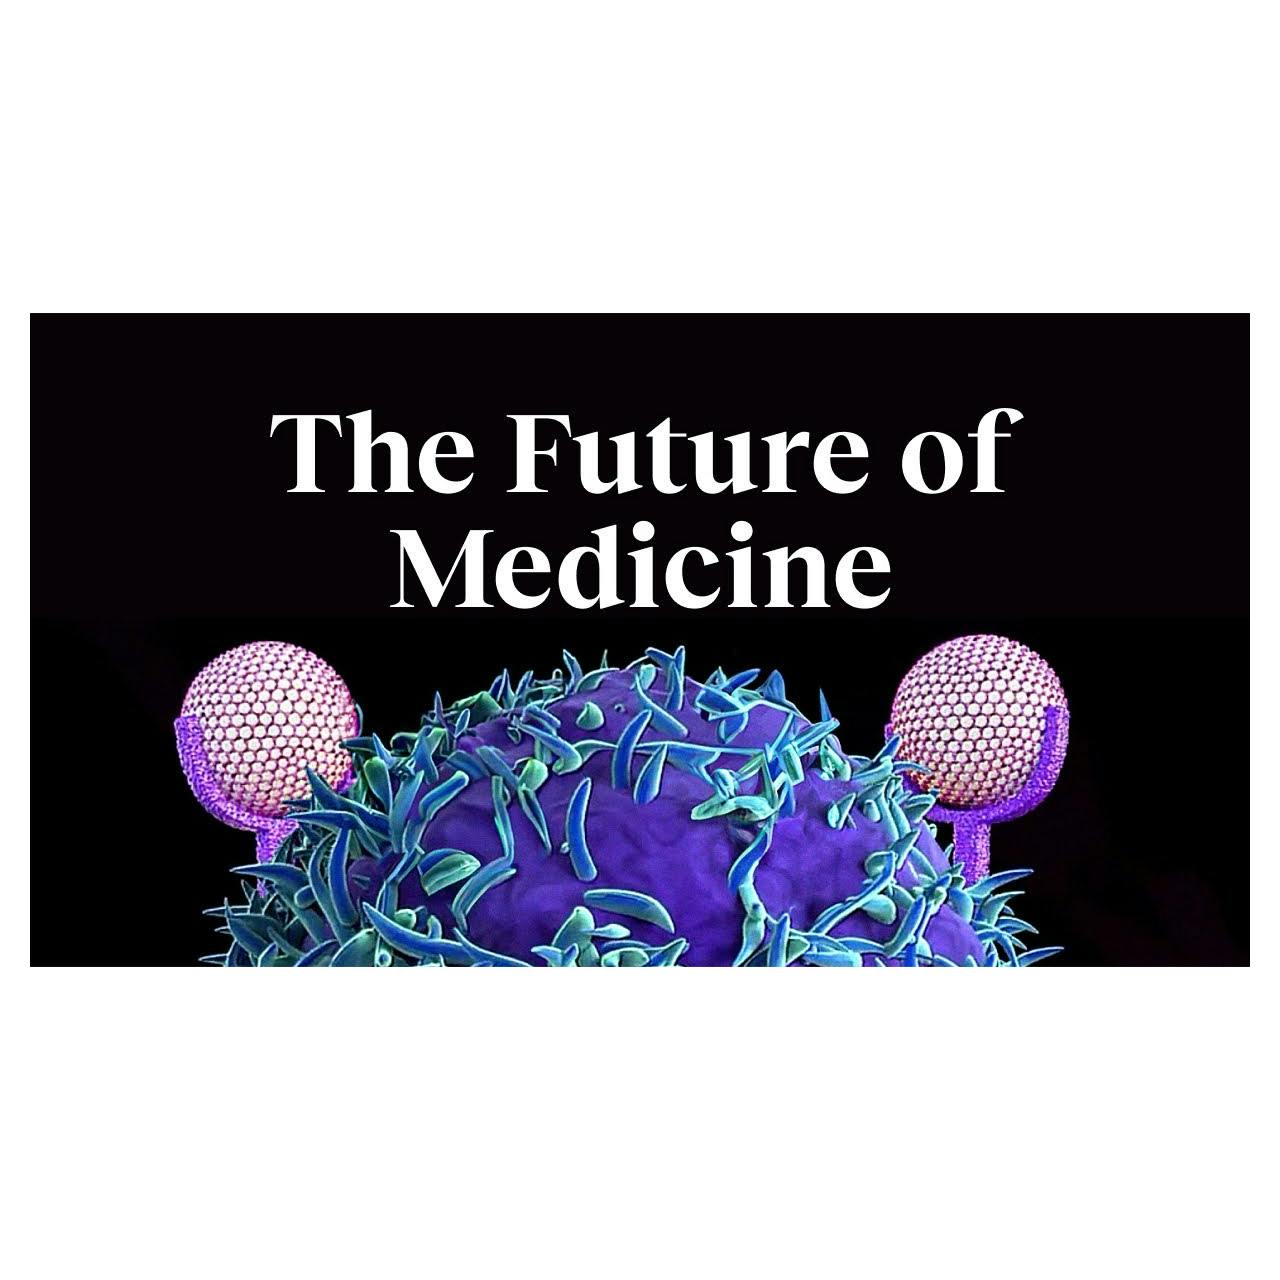 Stanford professor on the future of life-saving medicine | Steve Quake